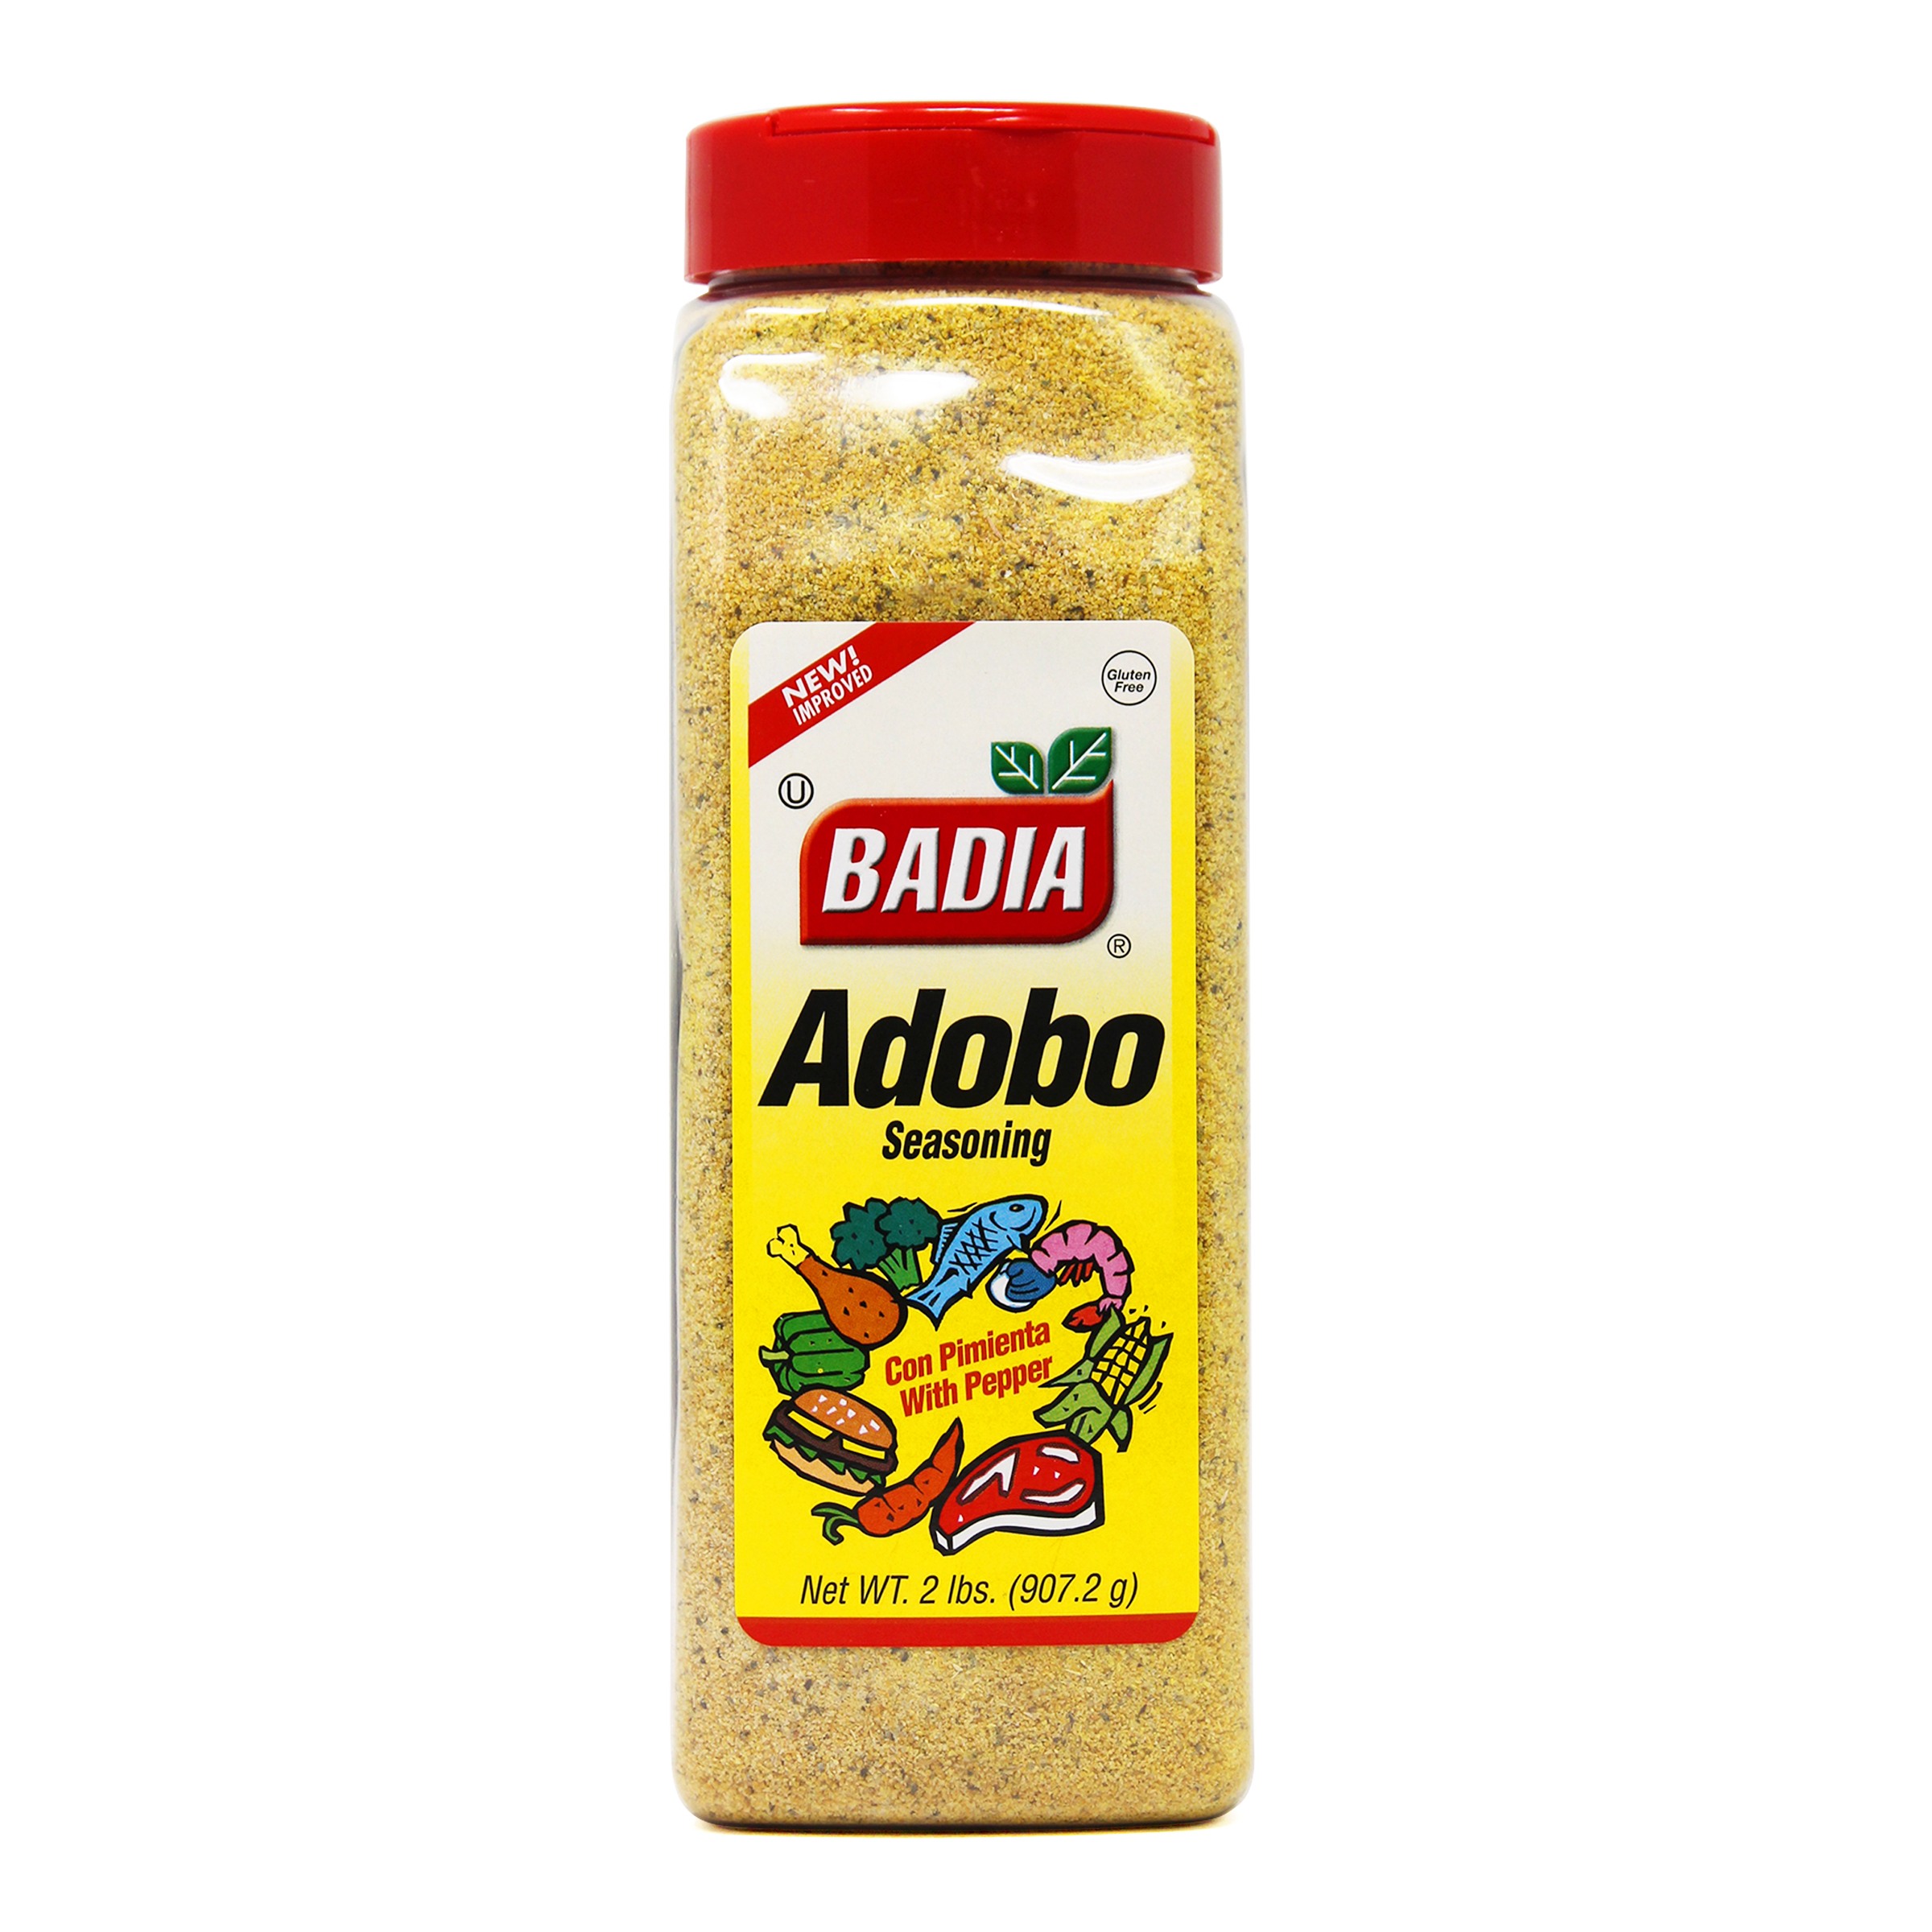 Badia Adobo with Complete Seasoning 9 oz, Kosher, GF